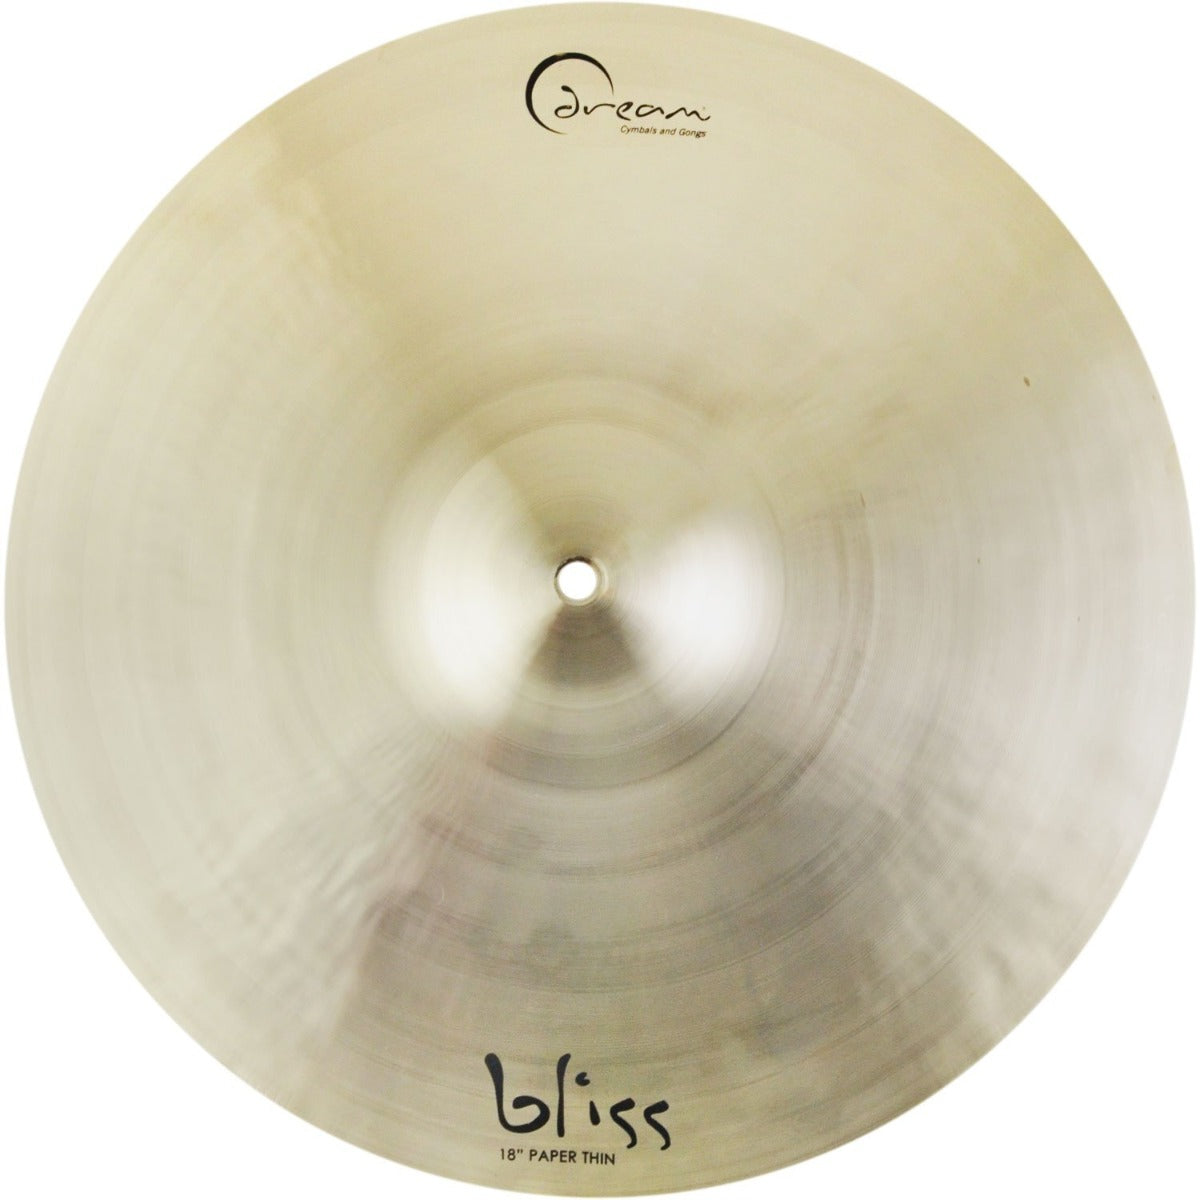 Dream 18” Bliss Paper Thin Crash Cymbal